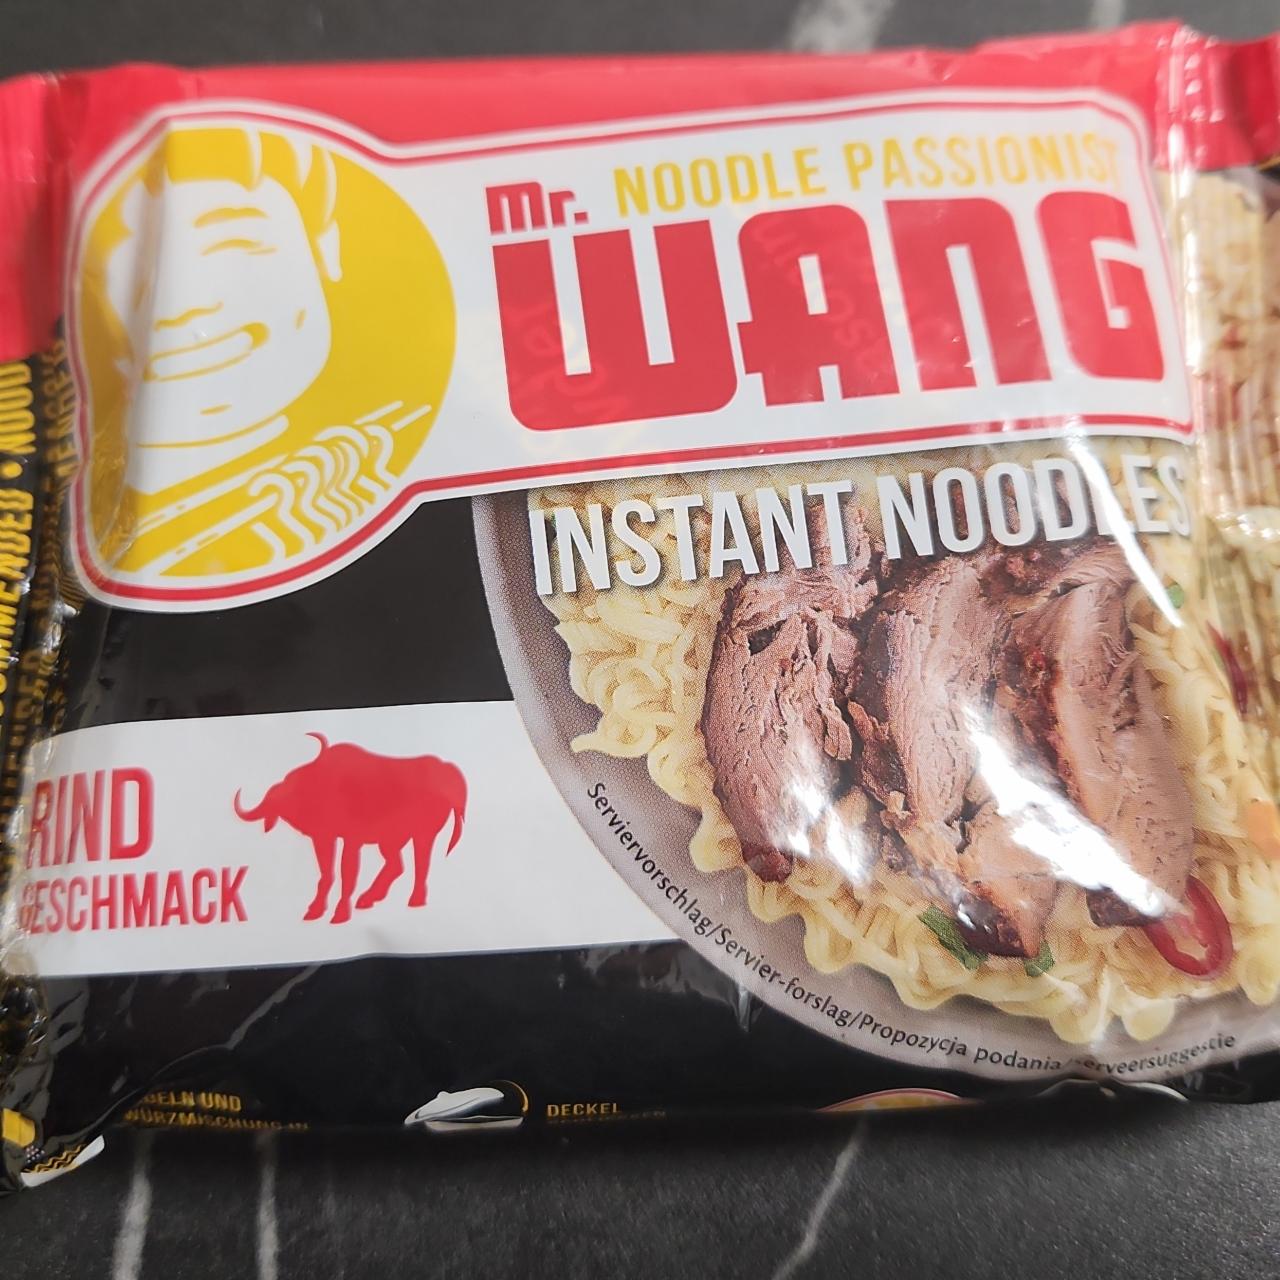 Fotografie - Mr. Noodle passionist Instant noodles rind geschmack Wang